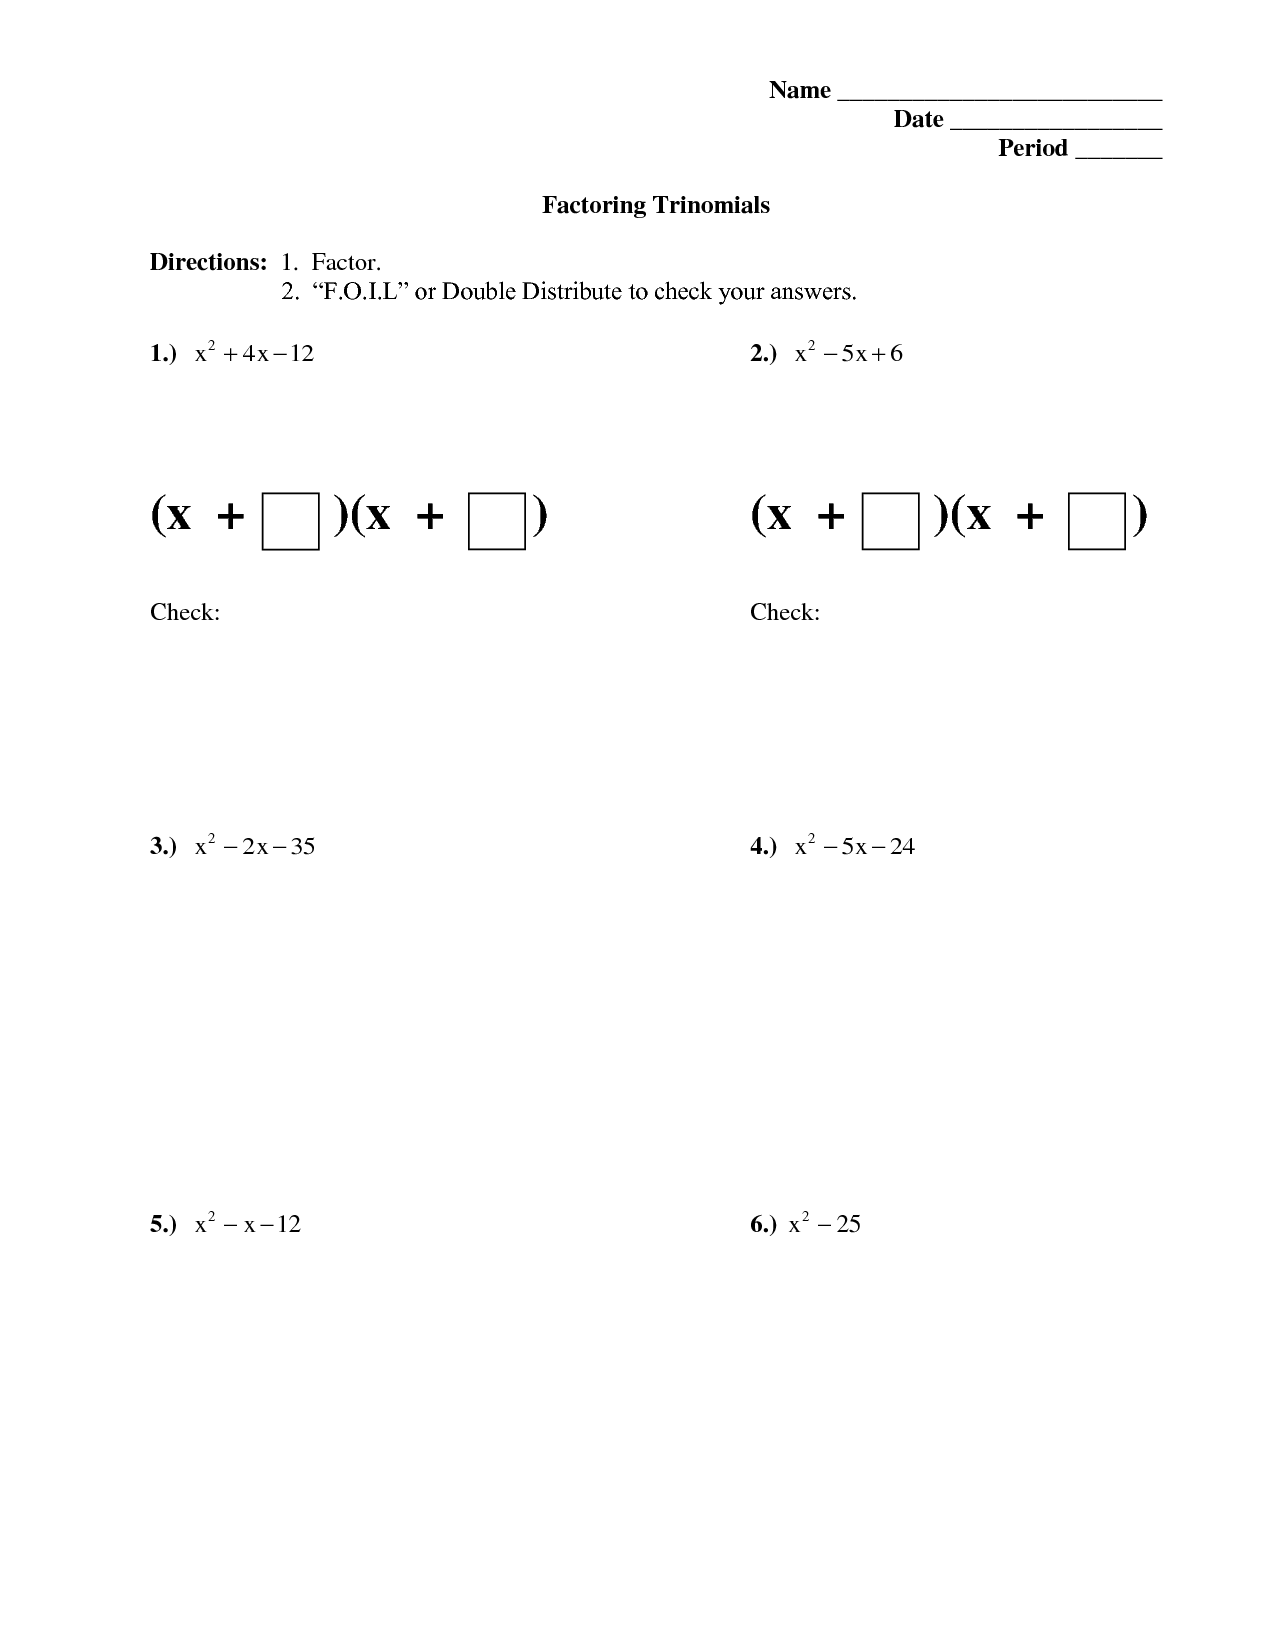 Factoring Quadratic Trinomials Worksheets Image